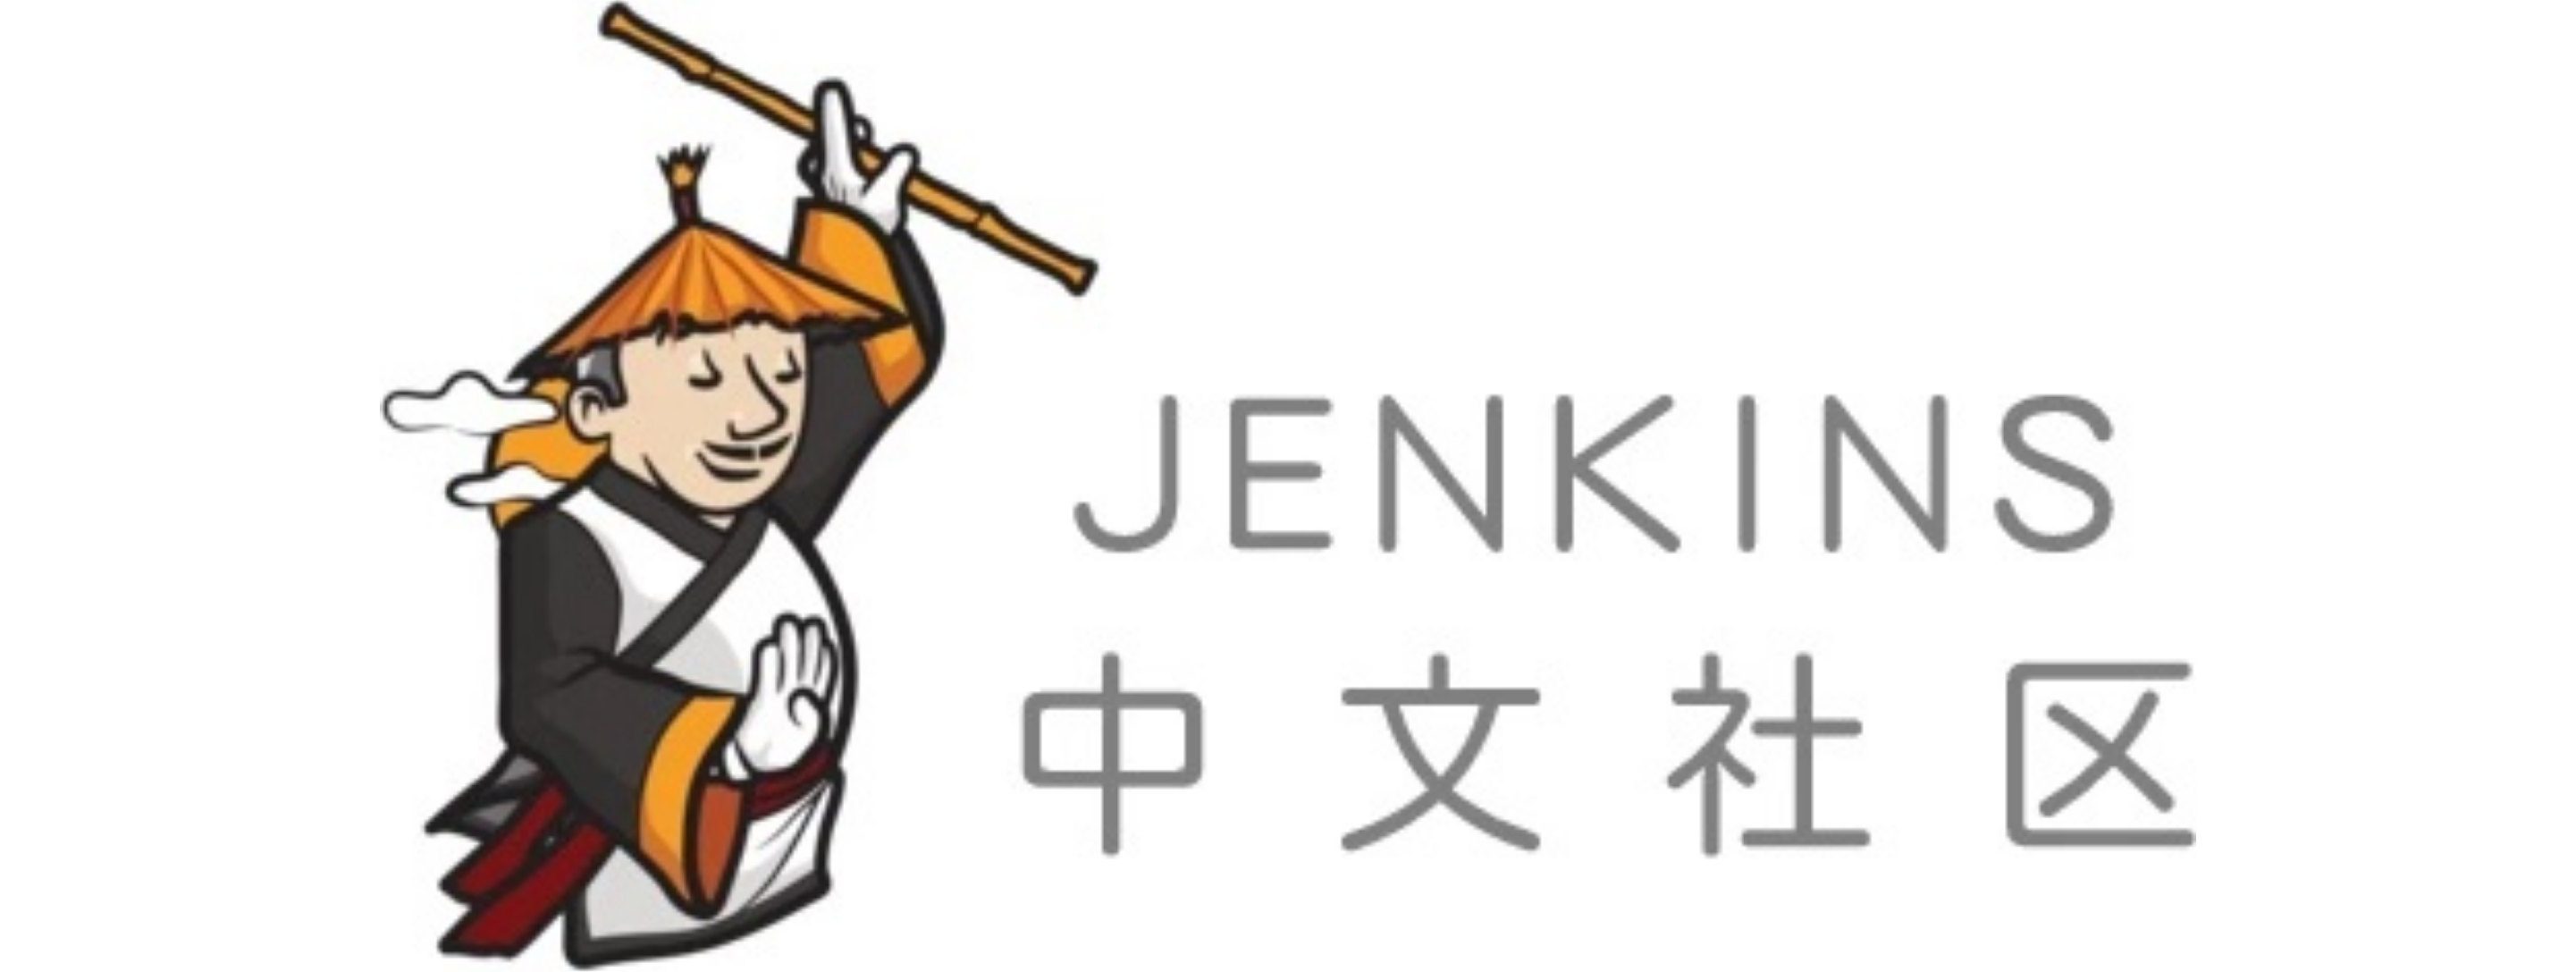 jenkins中文社区